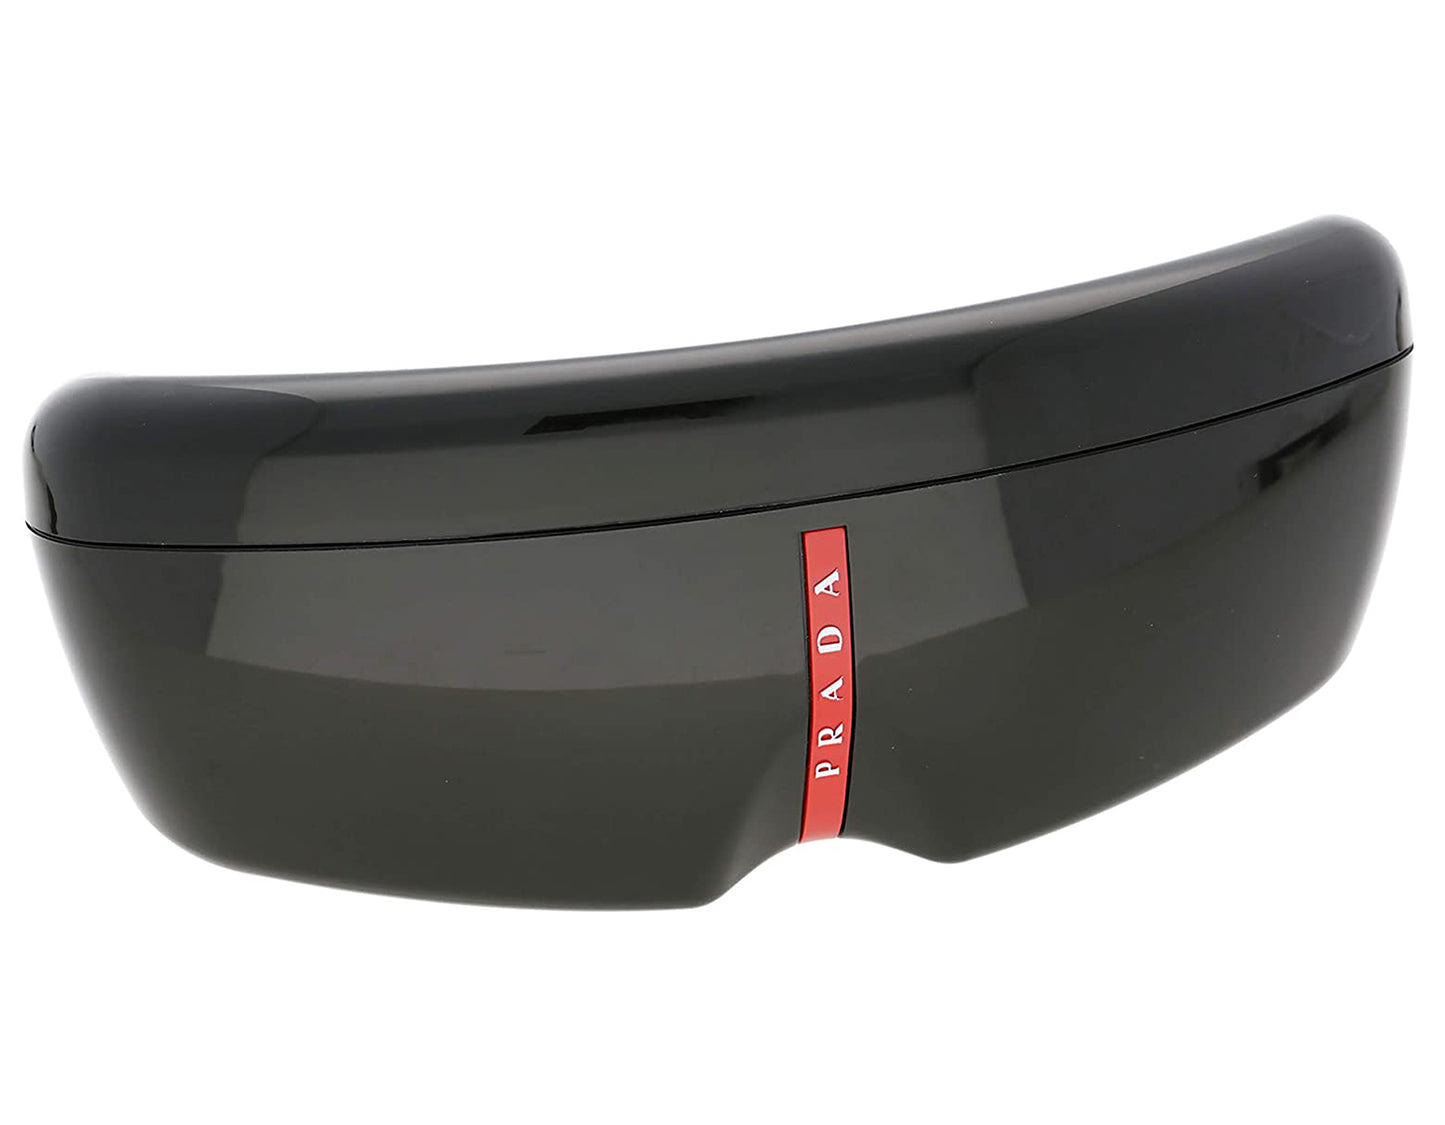 Prada Sport 0PS 05YS-DG002G 58mm New Sunglasses